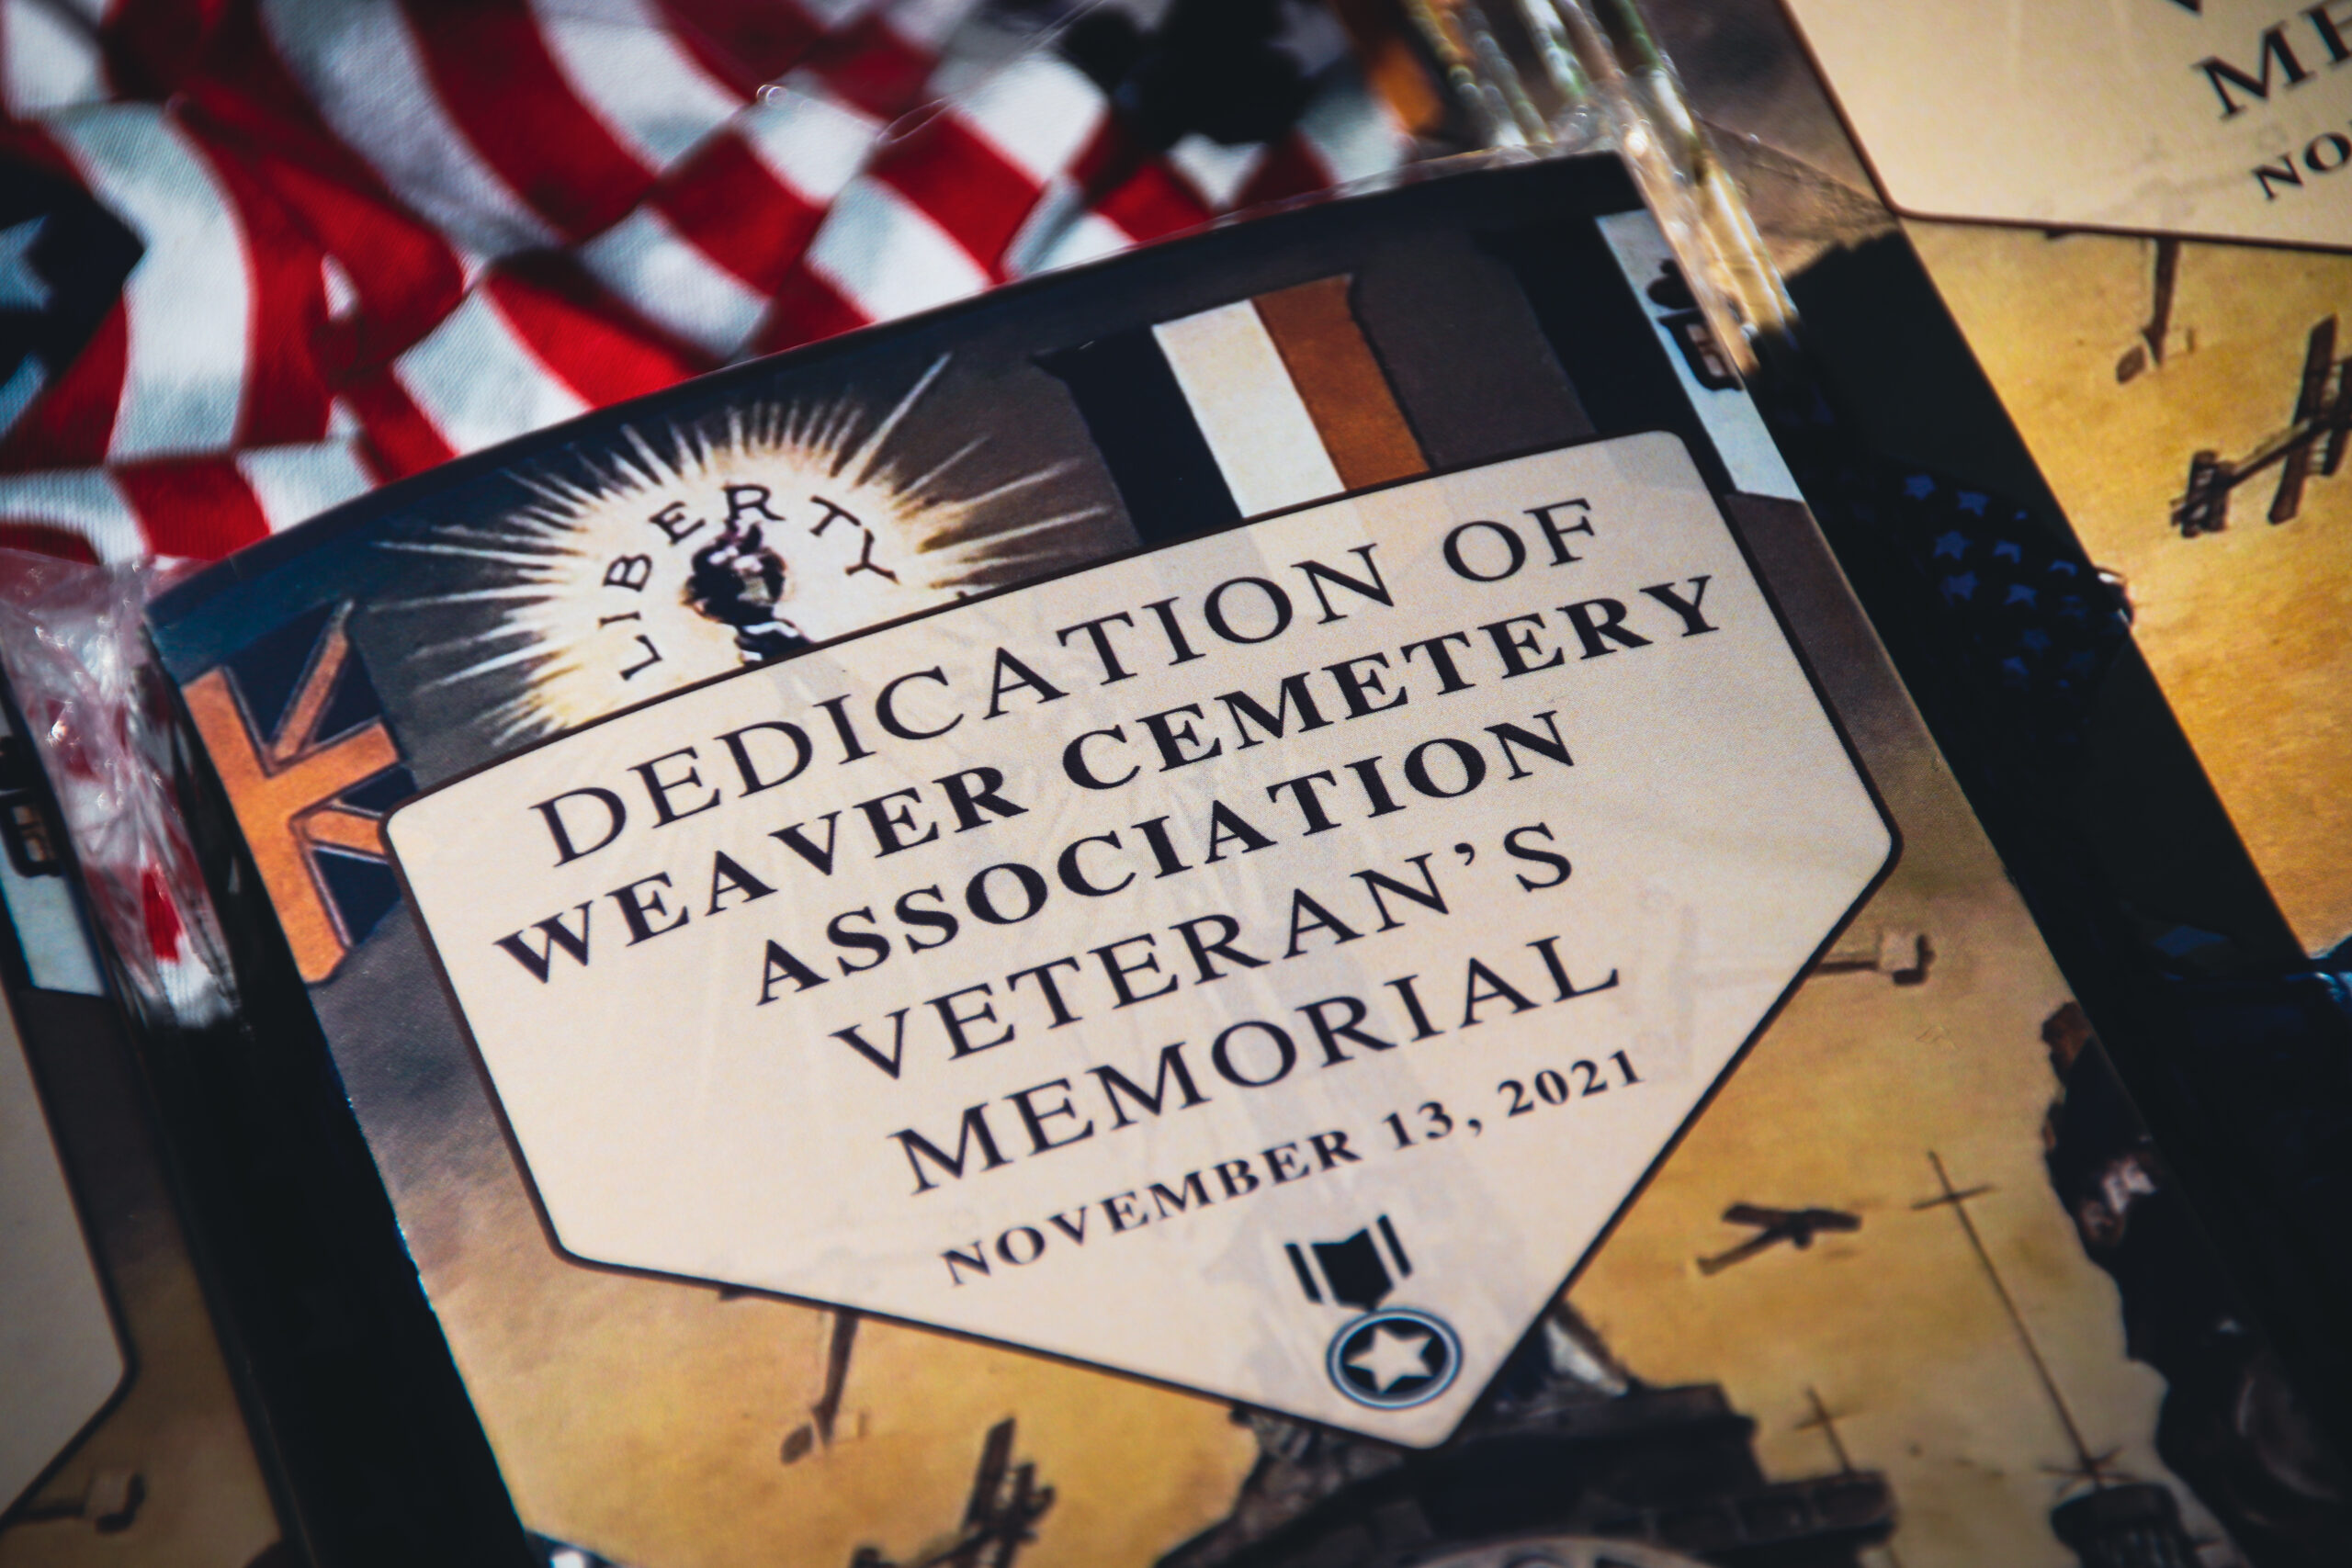 Weaver Cemetery Veterans Memorial Dedication